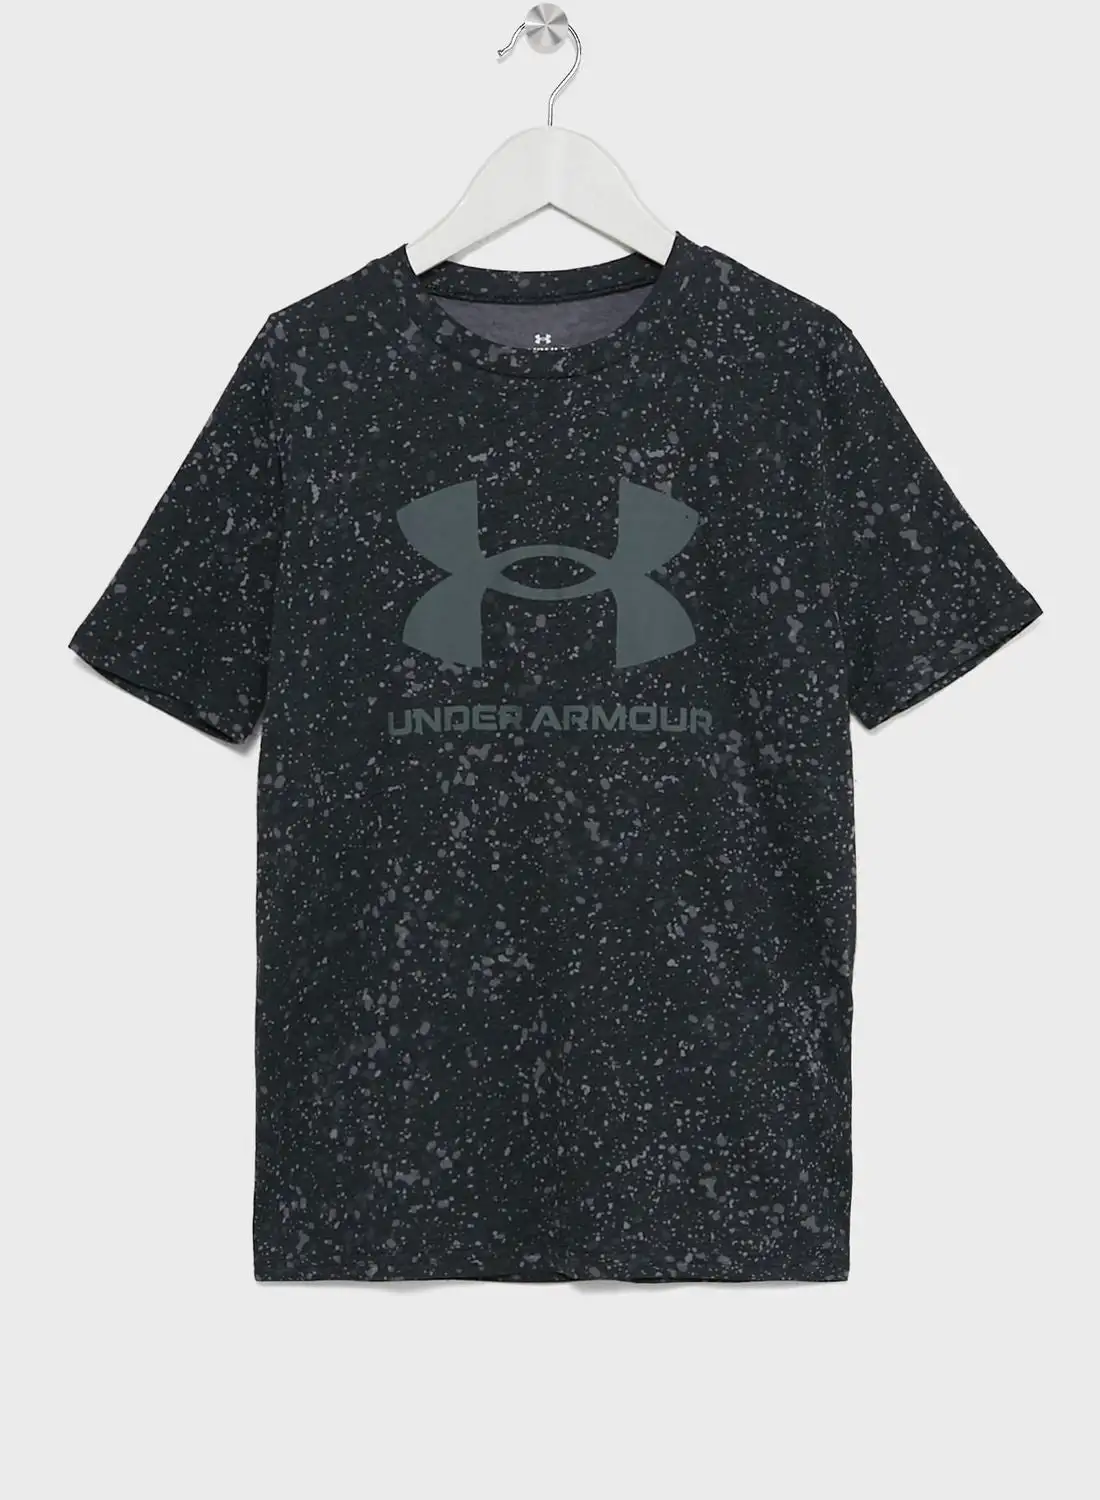 UNDER ARMOUR Boys' Sporstyle Logo T-Shirt